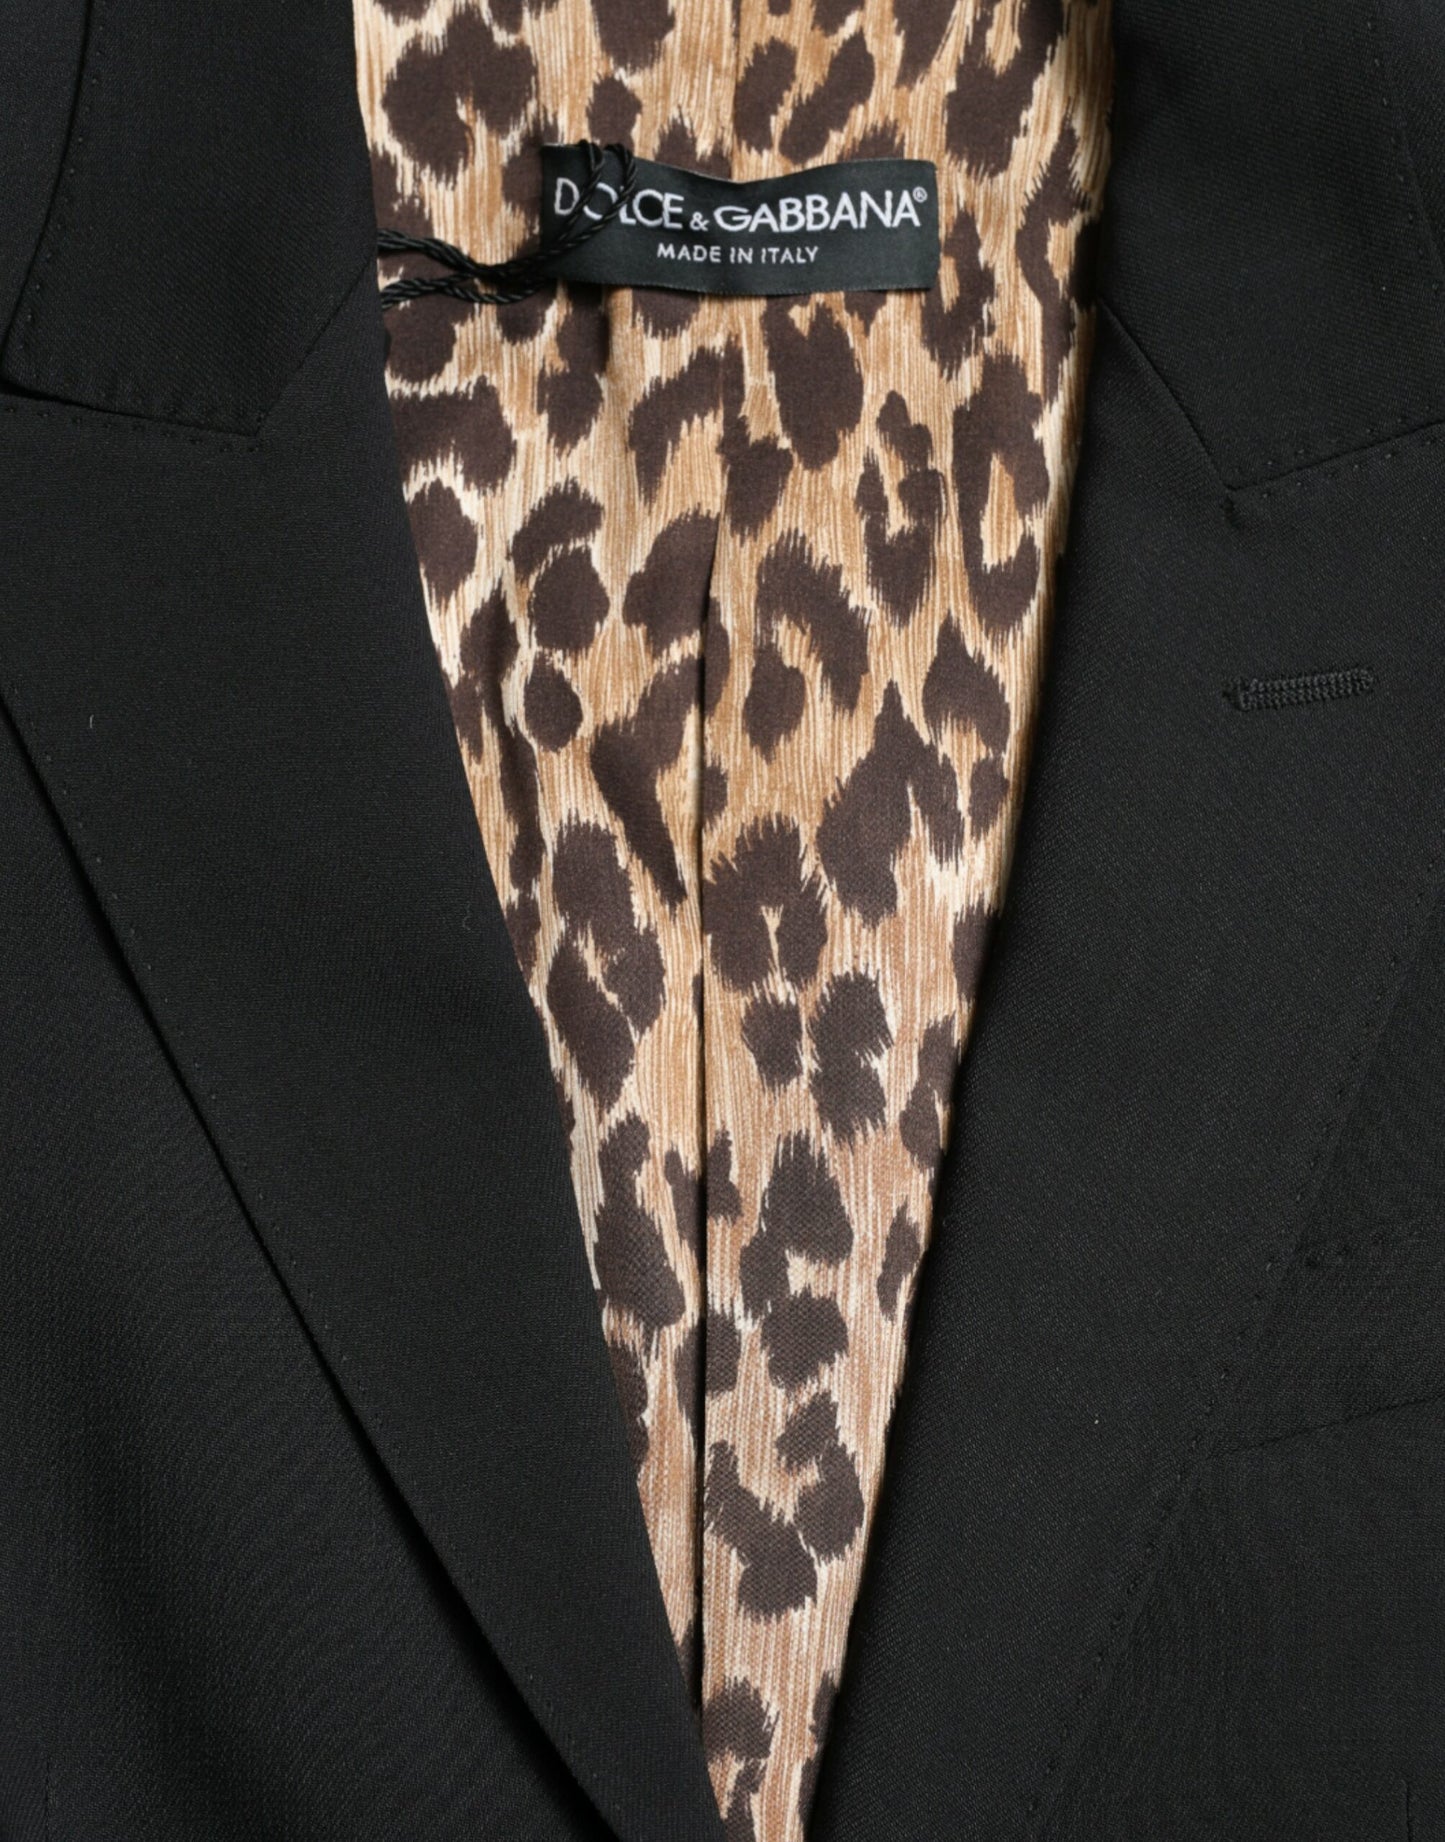 Dolce & Gabbana Black Wool Single Breasted Blazer Coat Jacket - DEA STILOSA MILANO